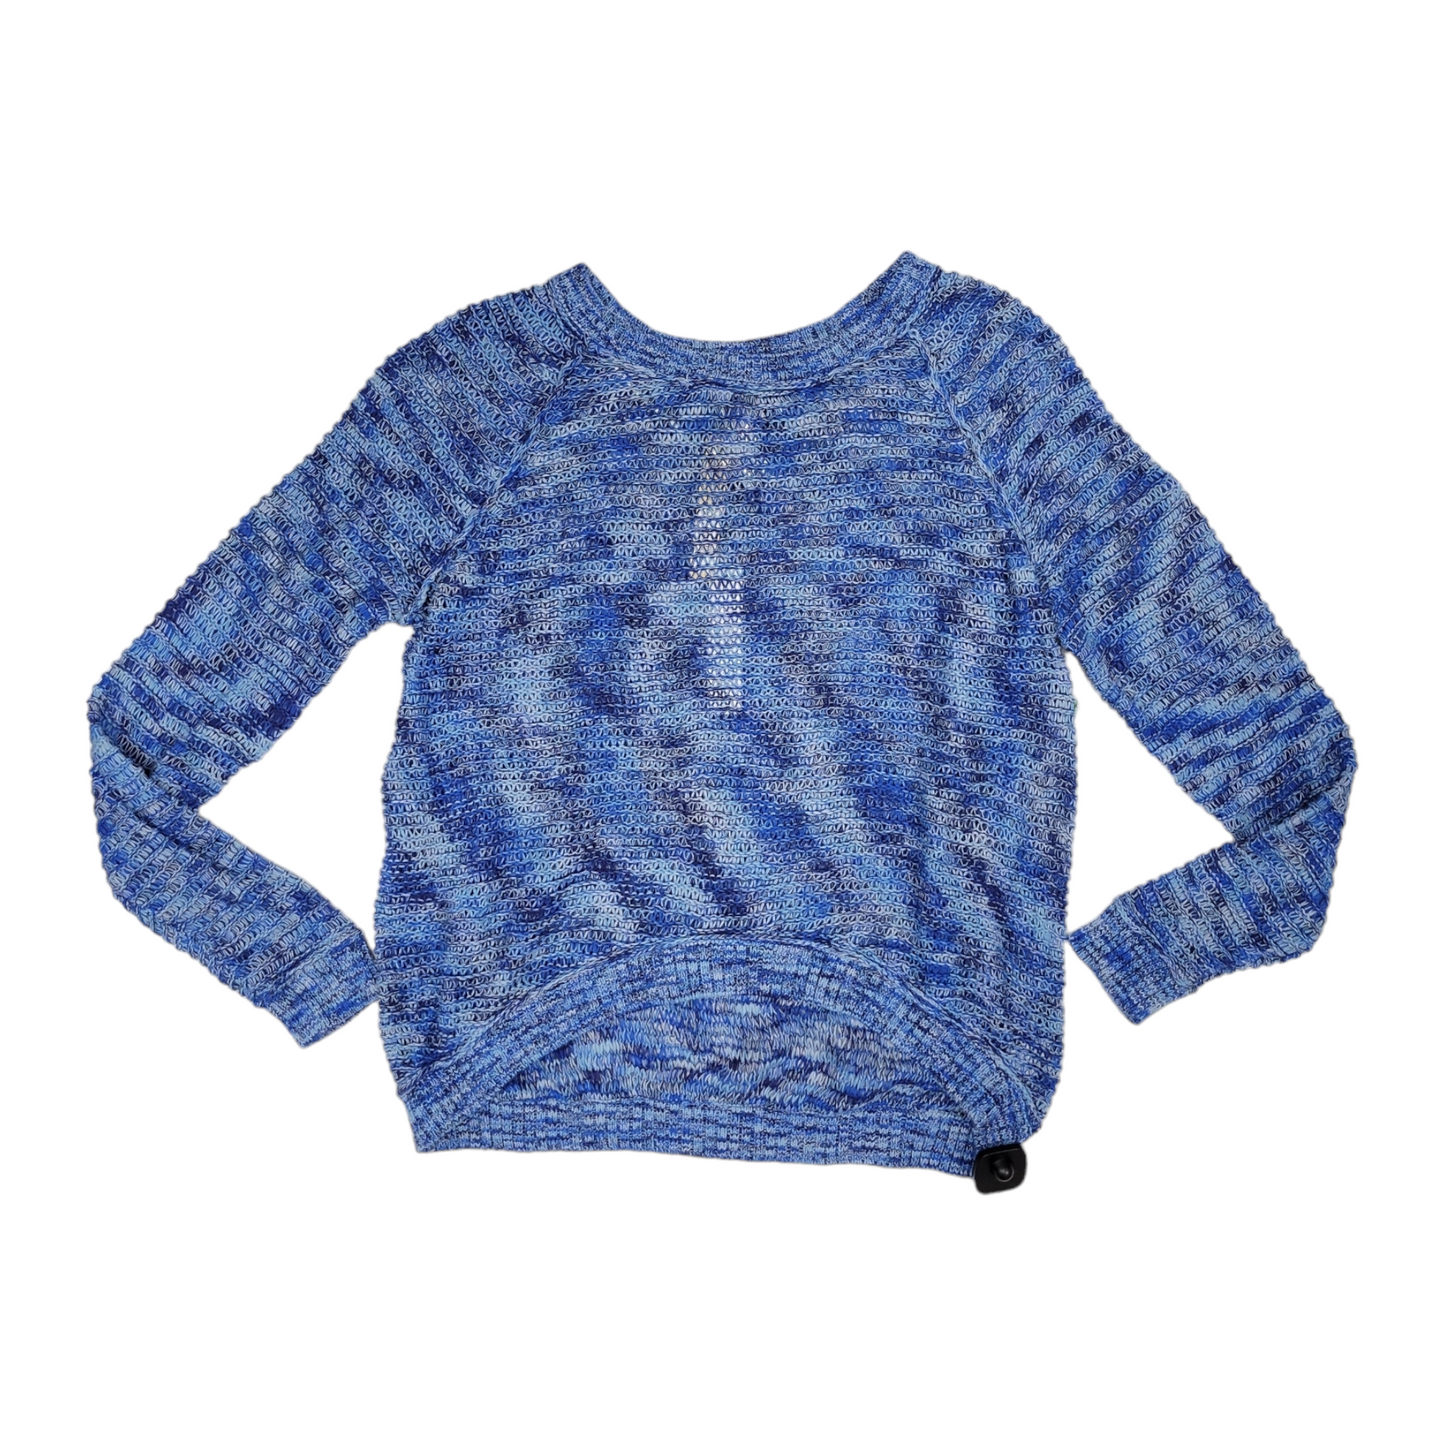 Sweater By lauren conrad  Size: Xl